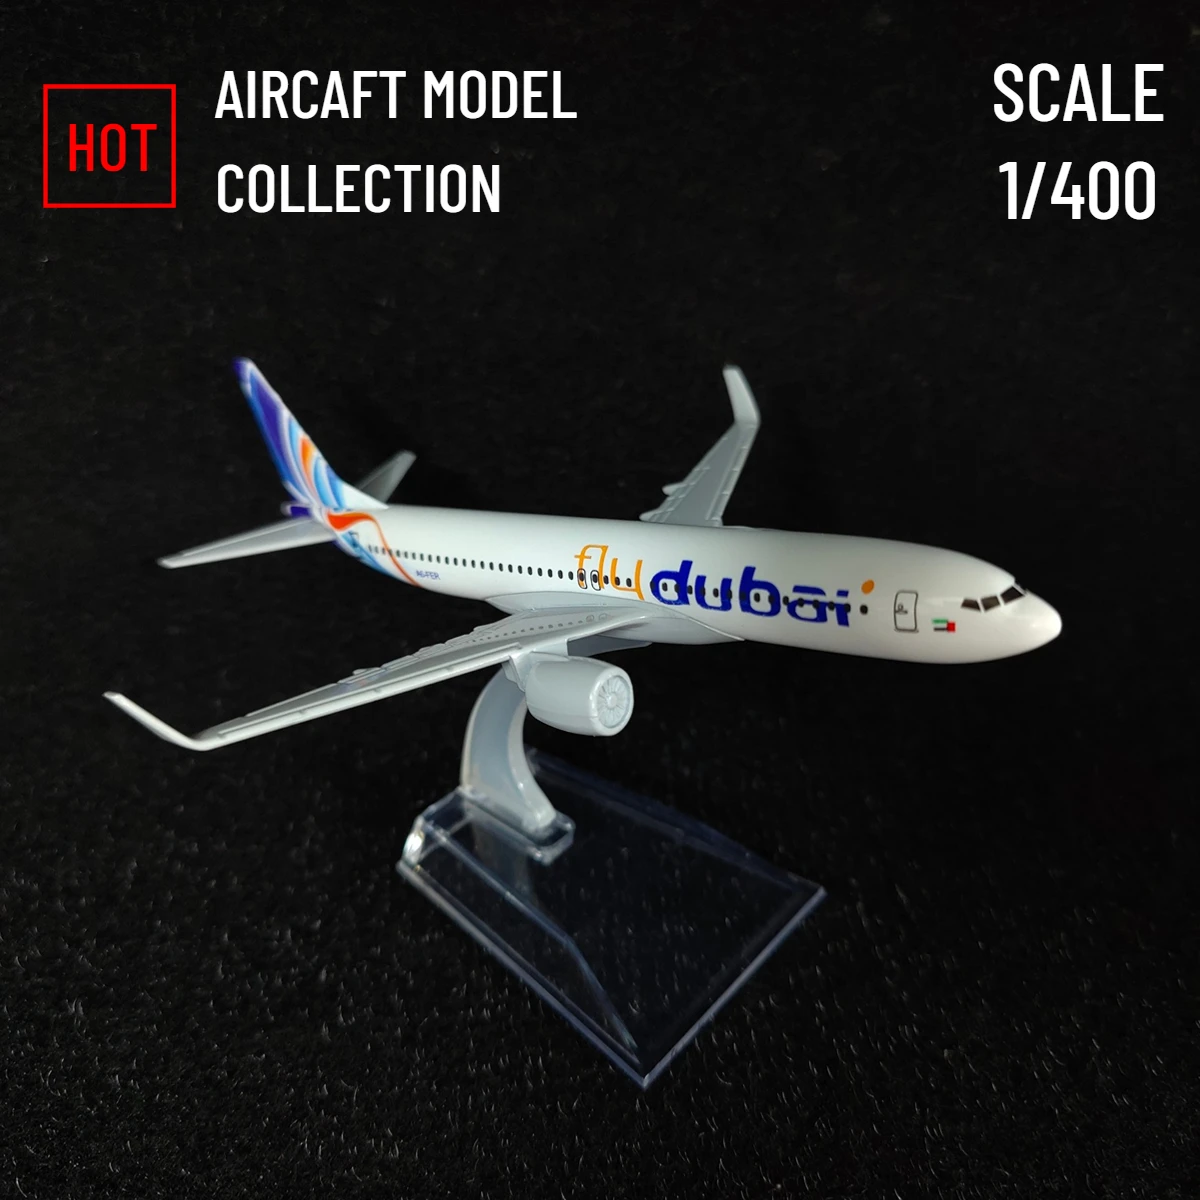 Scale 1:400 Metal Diecast Plane Model Dubai Airlines Replica 16cm Boeing Airbus Aircraft Aviation Miniature Toy